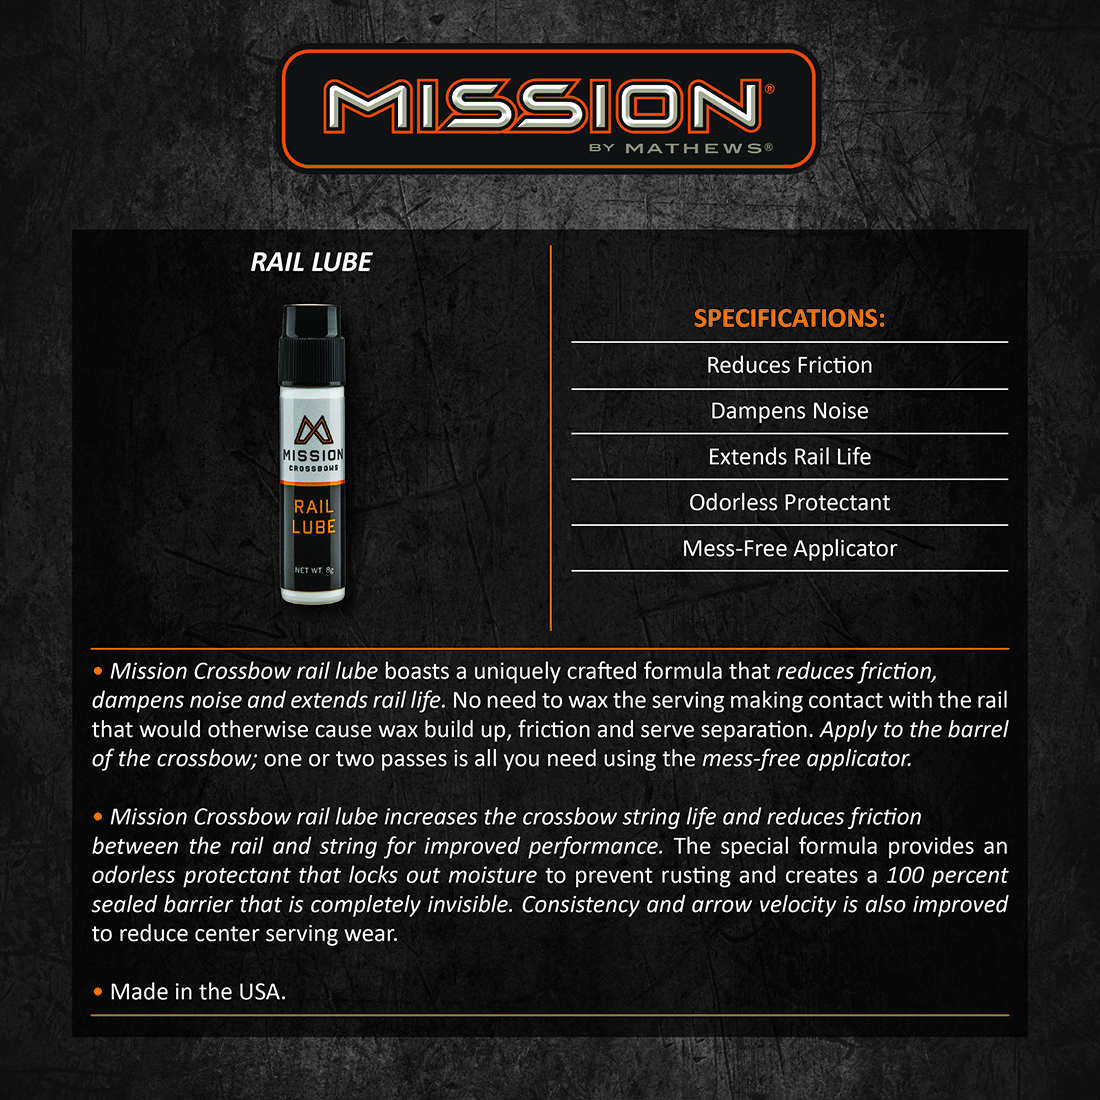 Mission_Crossbows_Rail_Lube_Product_Description